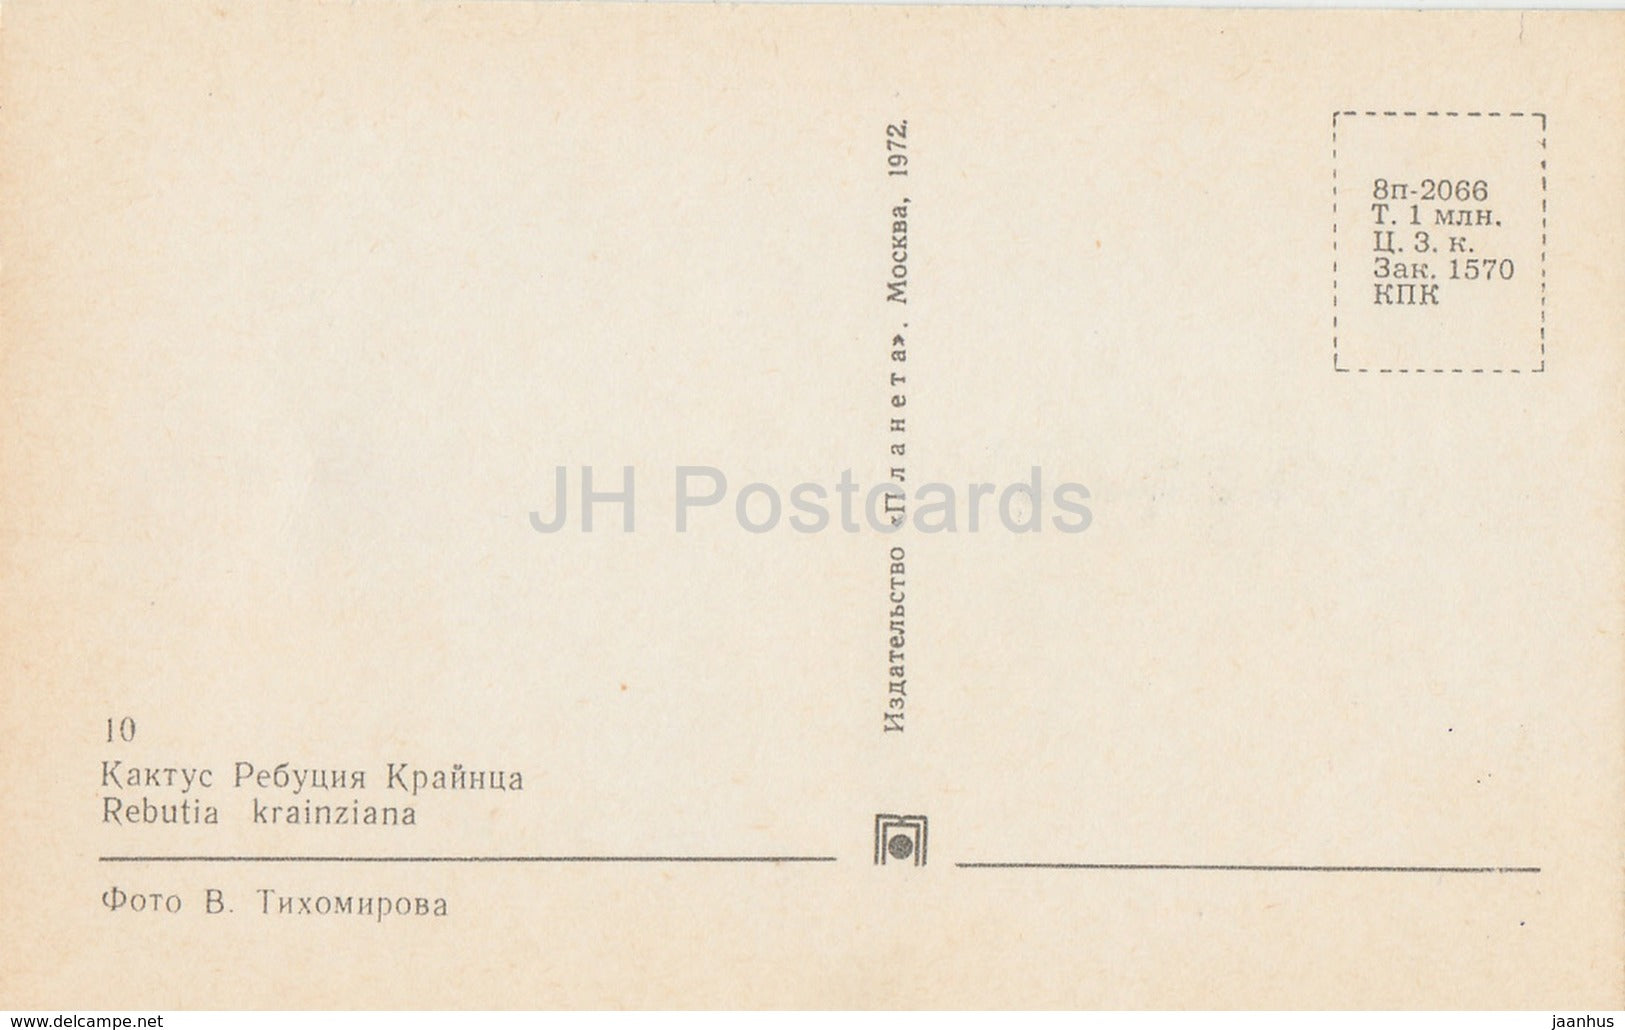 Rebutia krainziana - Cactus - Flowers - 1972 - Russia USSR - unused - JH Postcards